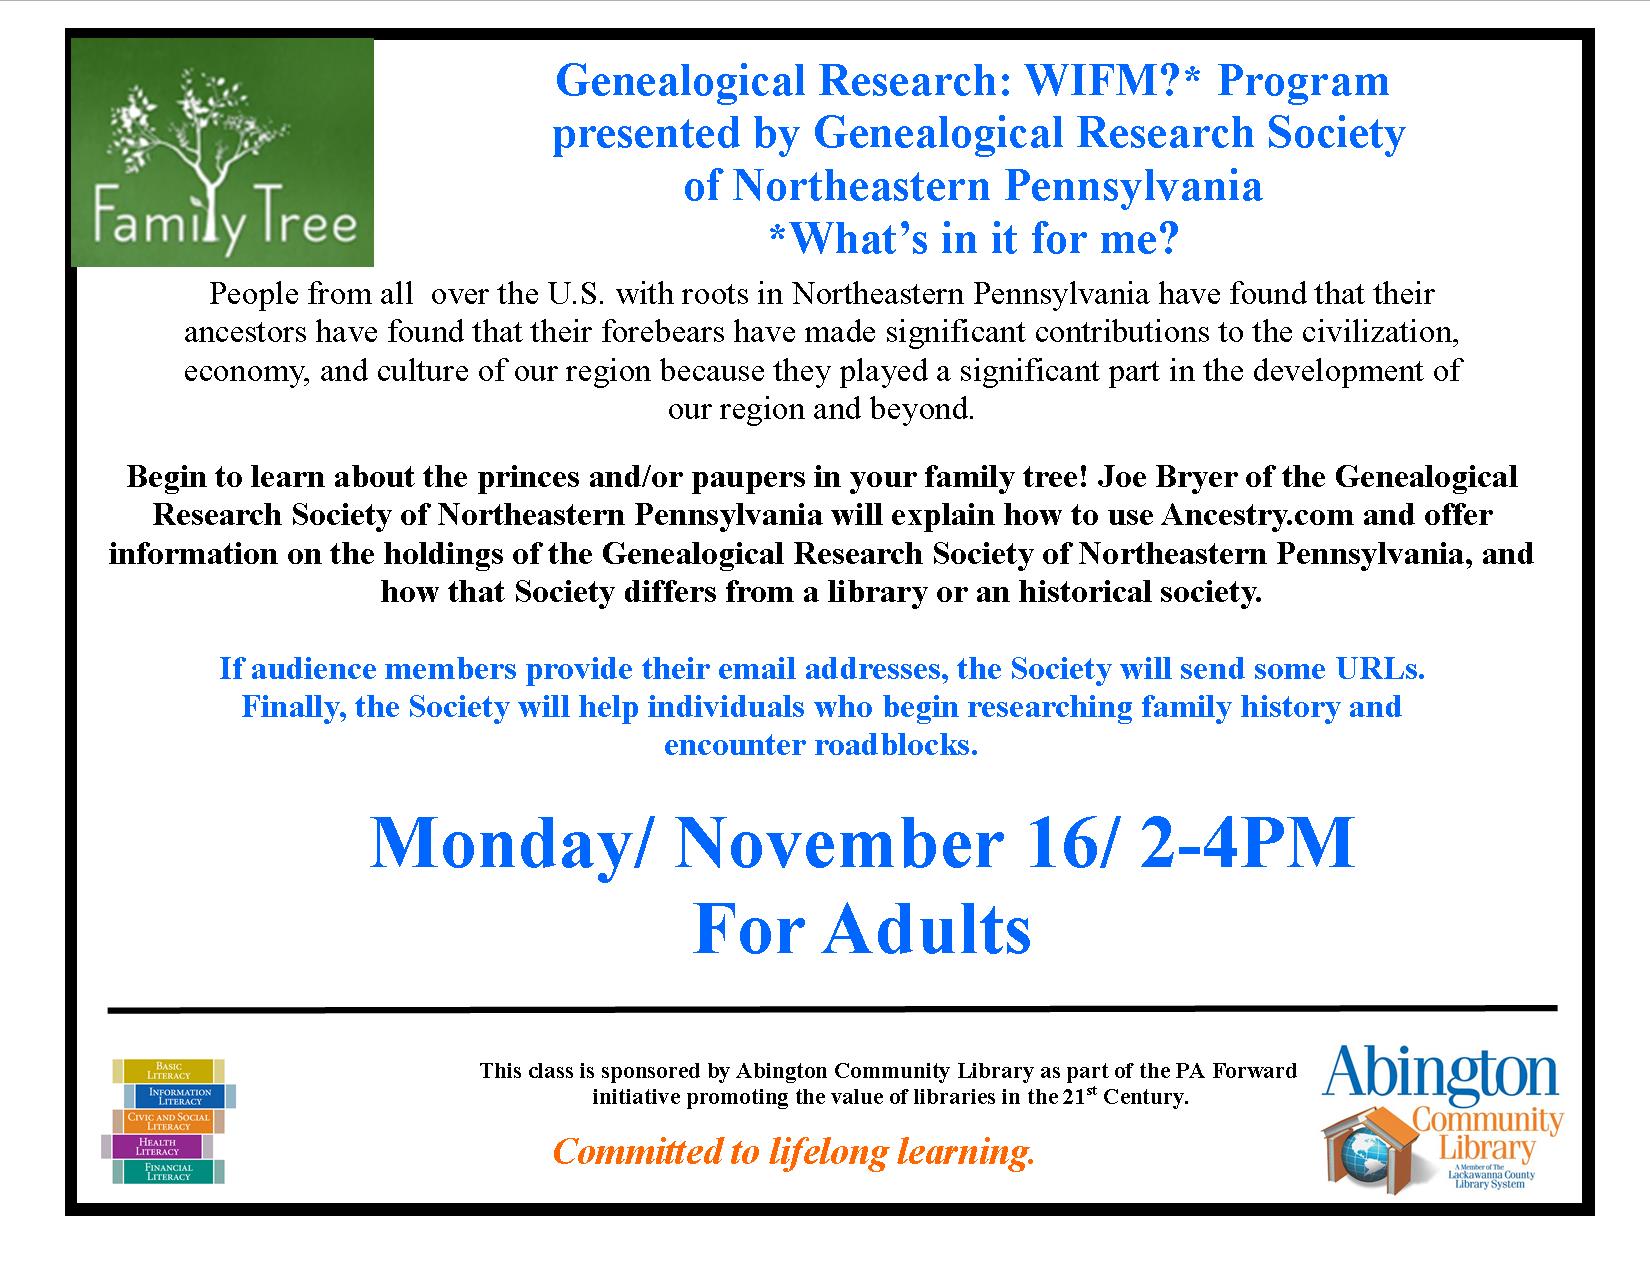 Genealogy Class_NEPA GenealogySociety_Nov 16